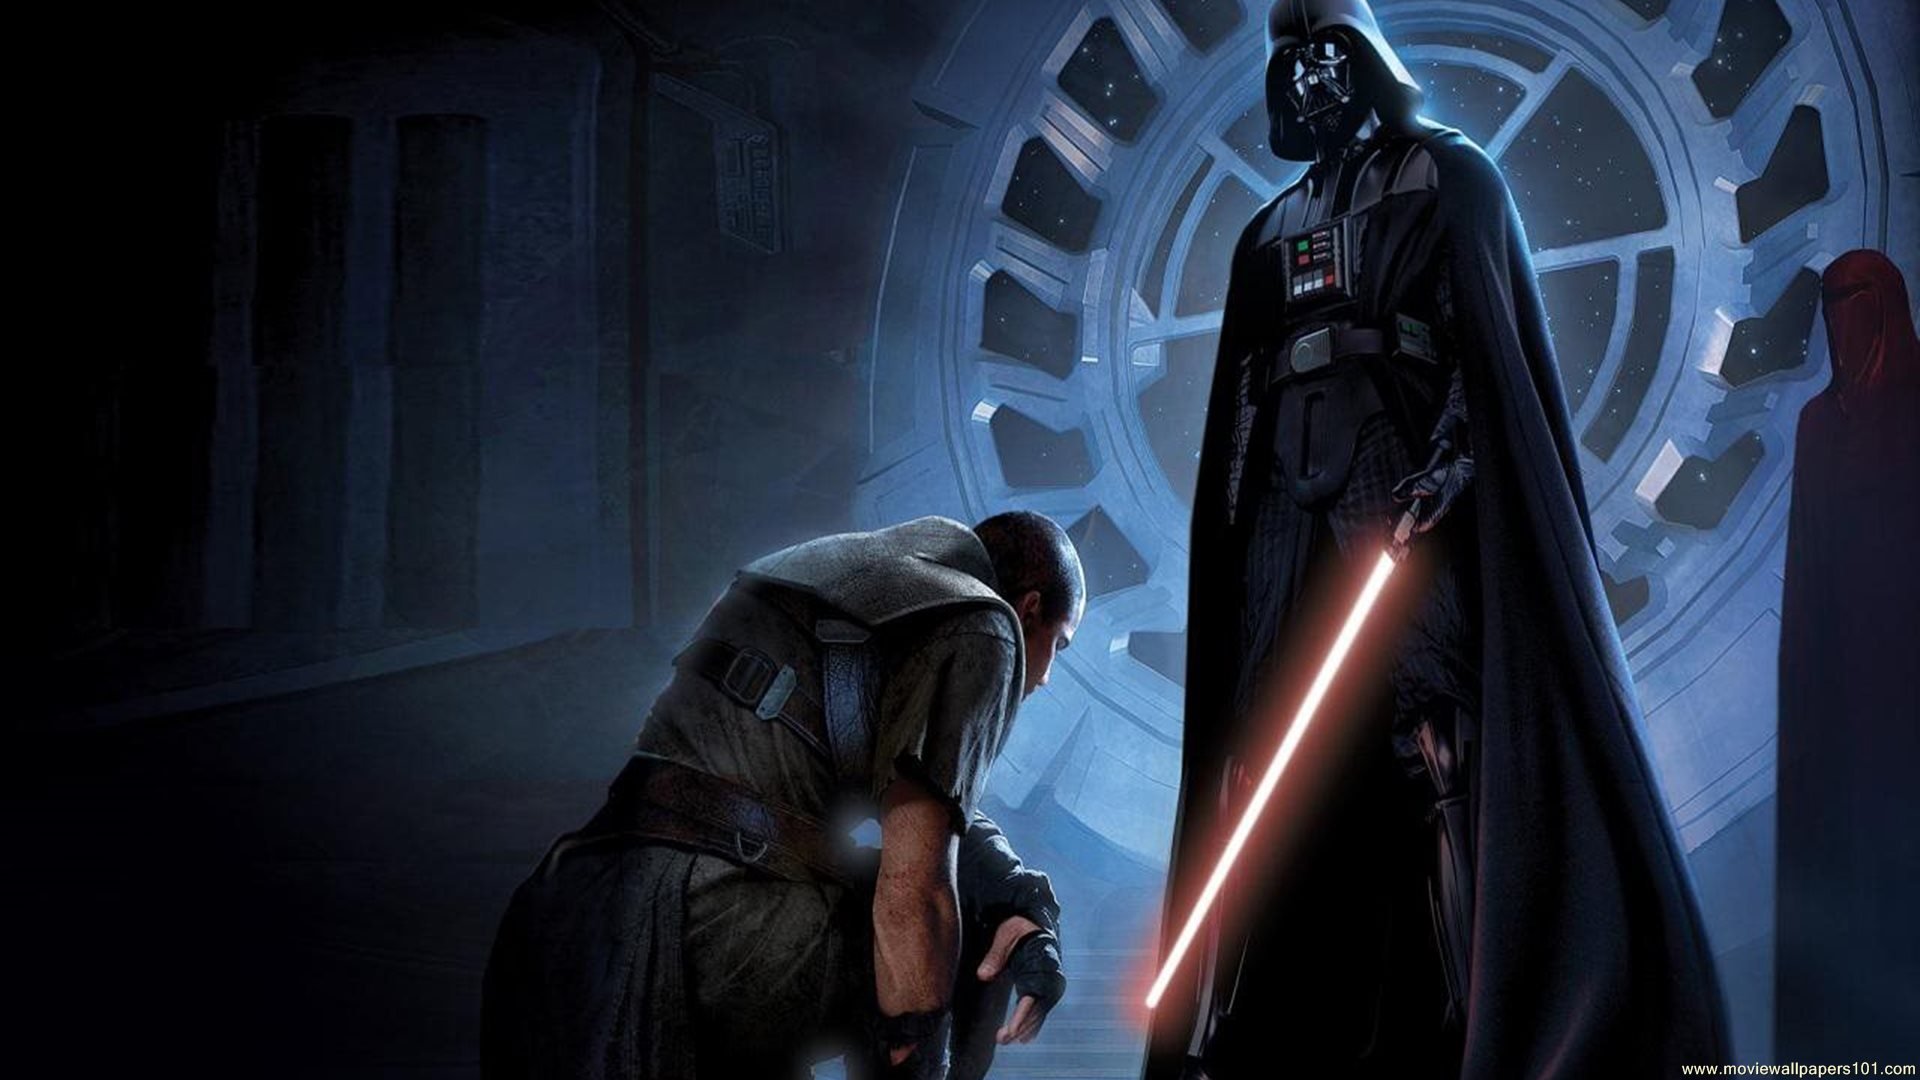 Star Wars Episode VII The Force Awakens 2015 Movie HD Wallpaperjpg